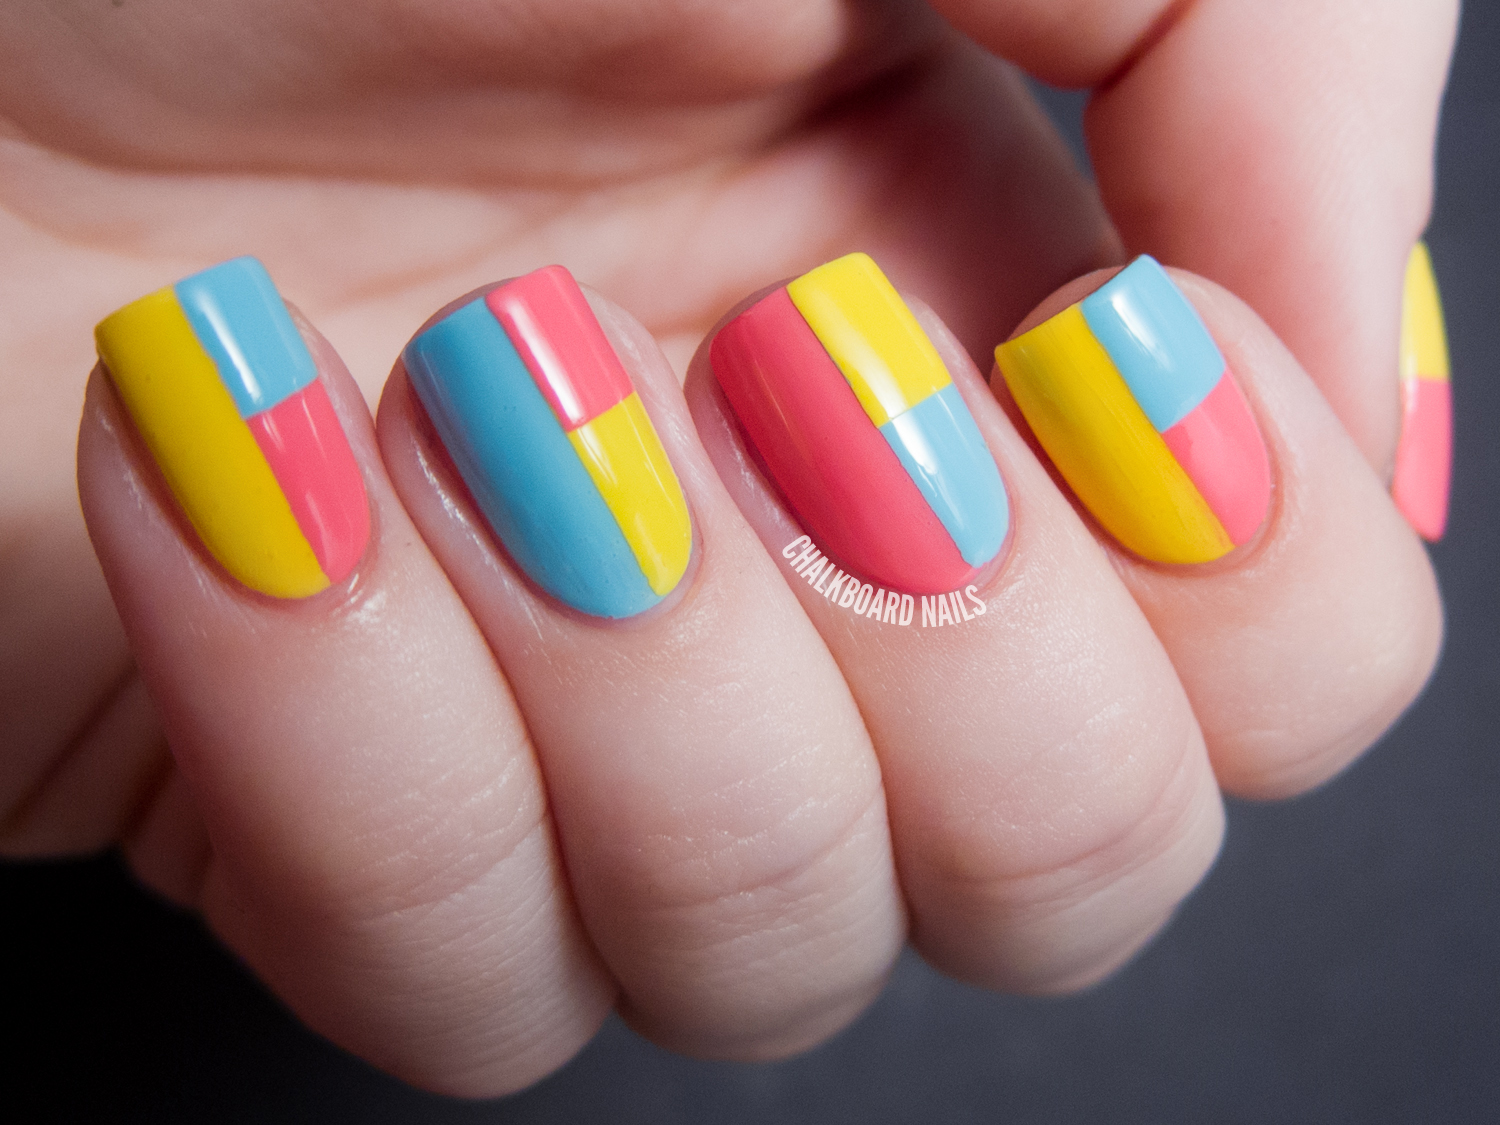 3. Color block nails - wide 4